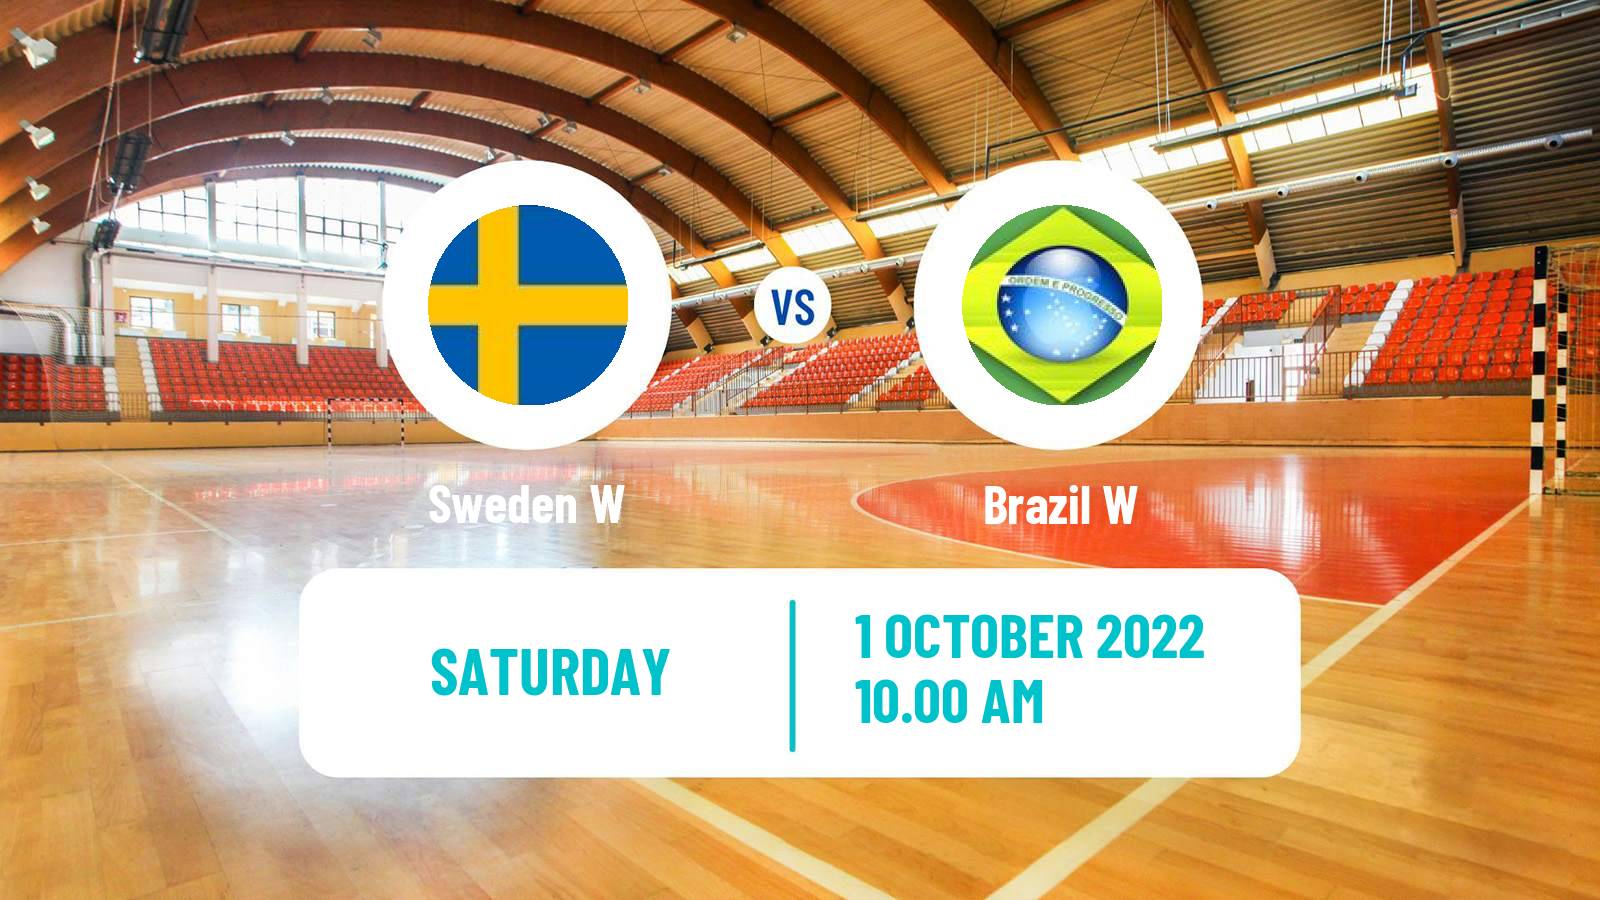 Handball Friendly International Handball Women Sweden W - Brazil W